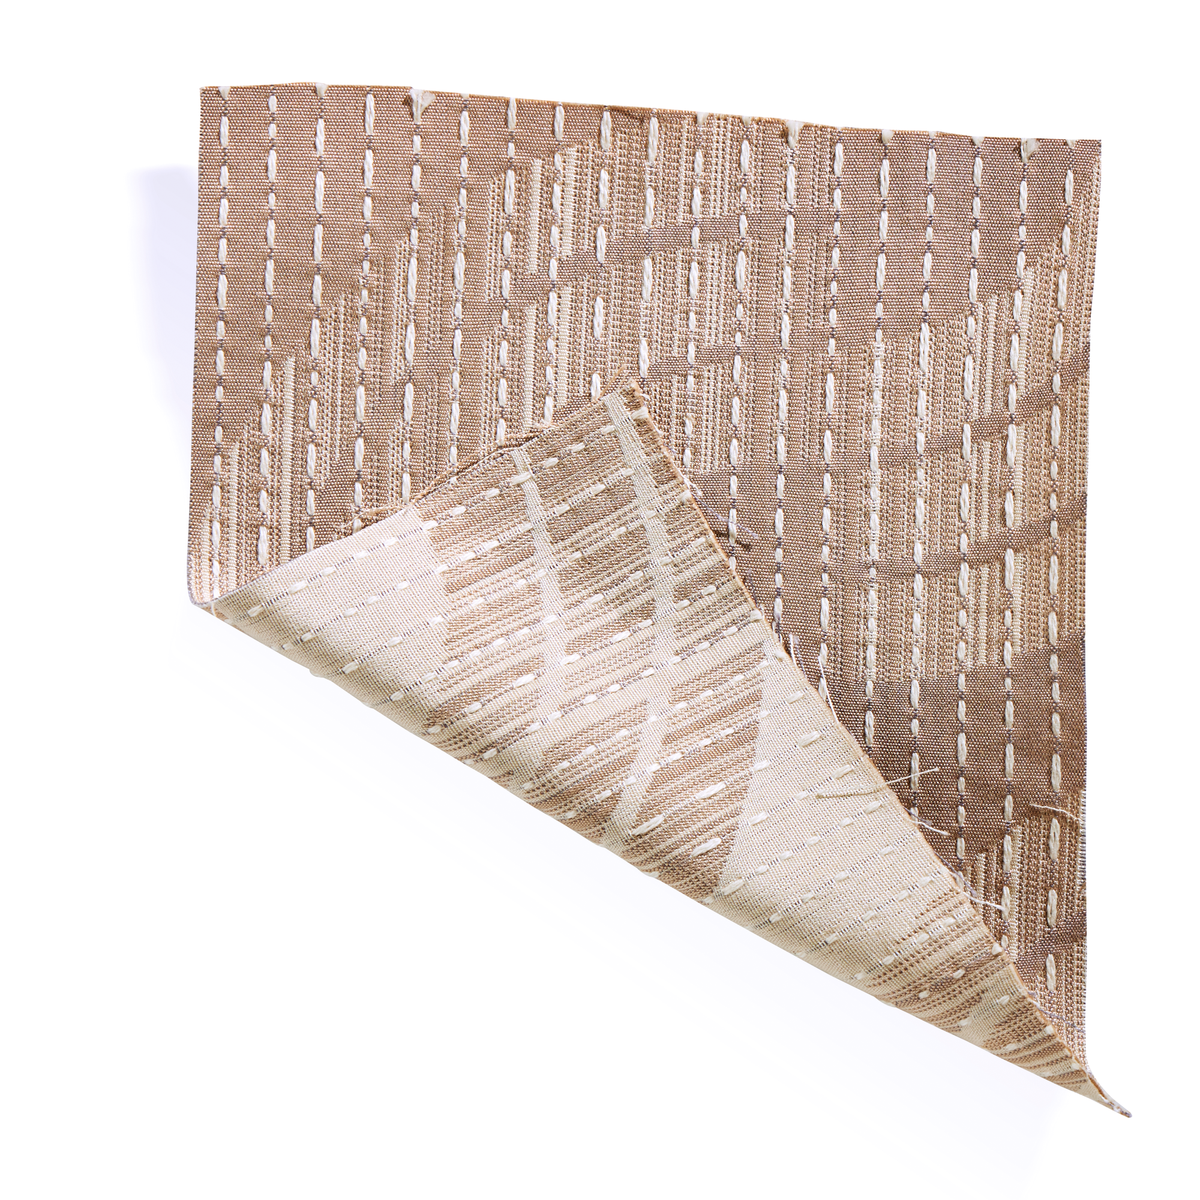 Sashiko Wave Fabric in Taupe